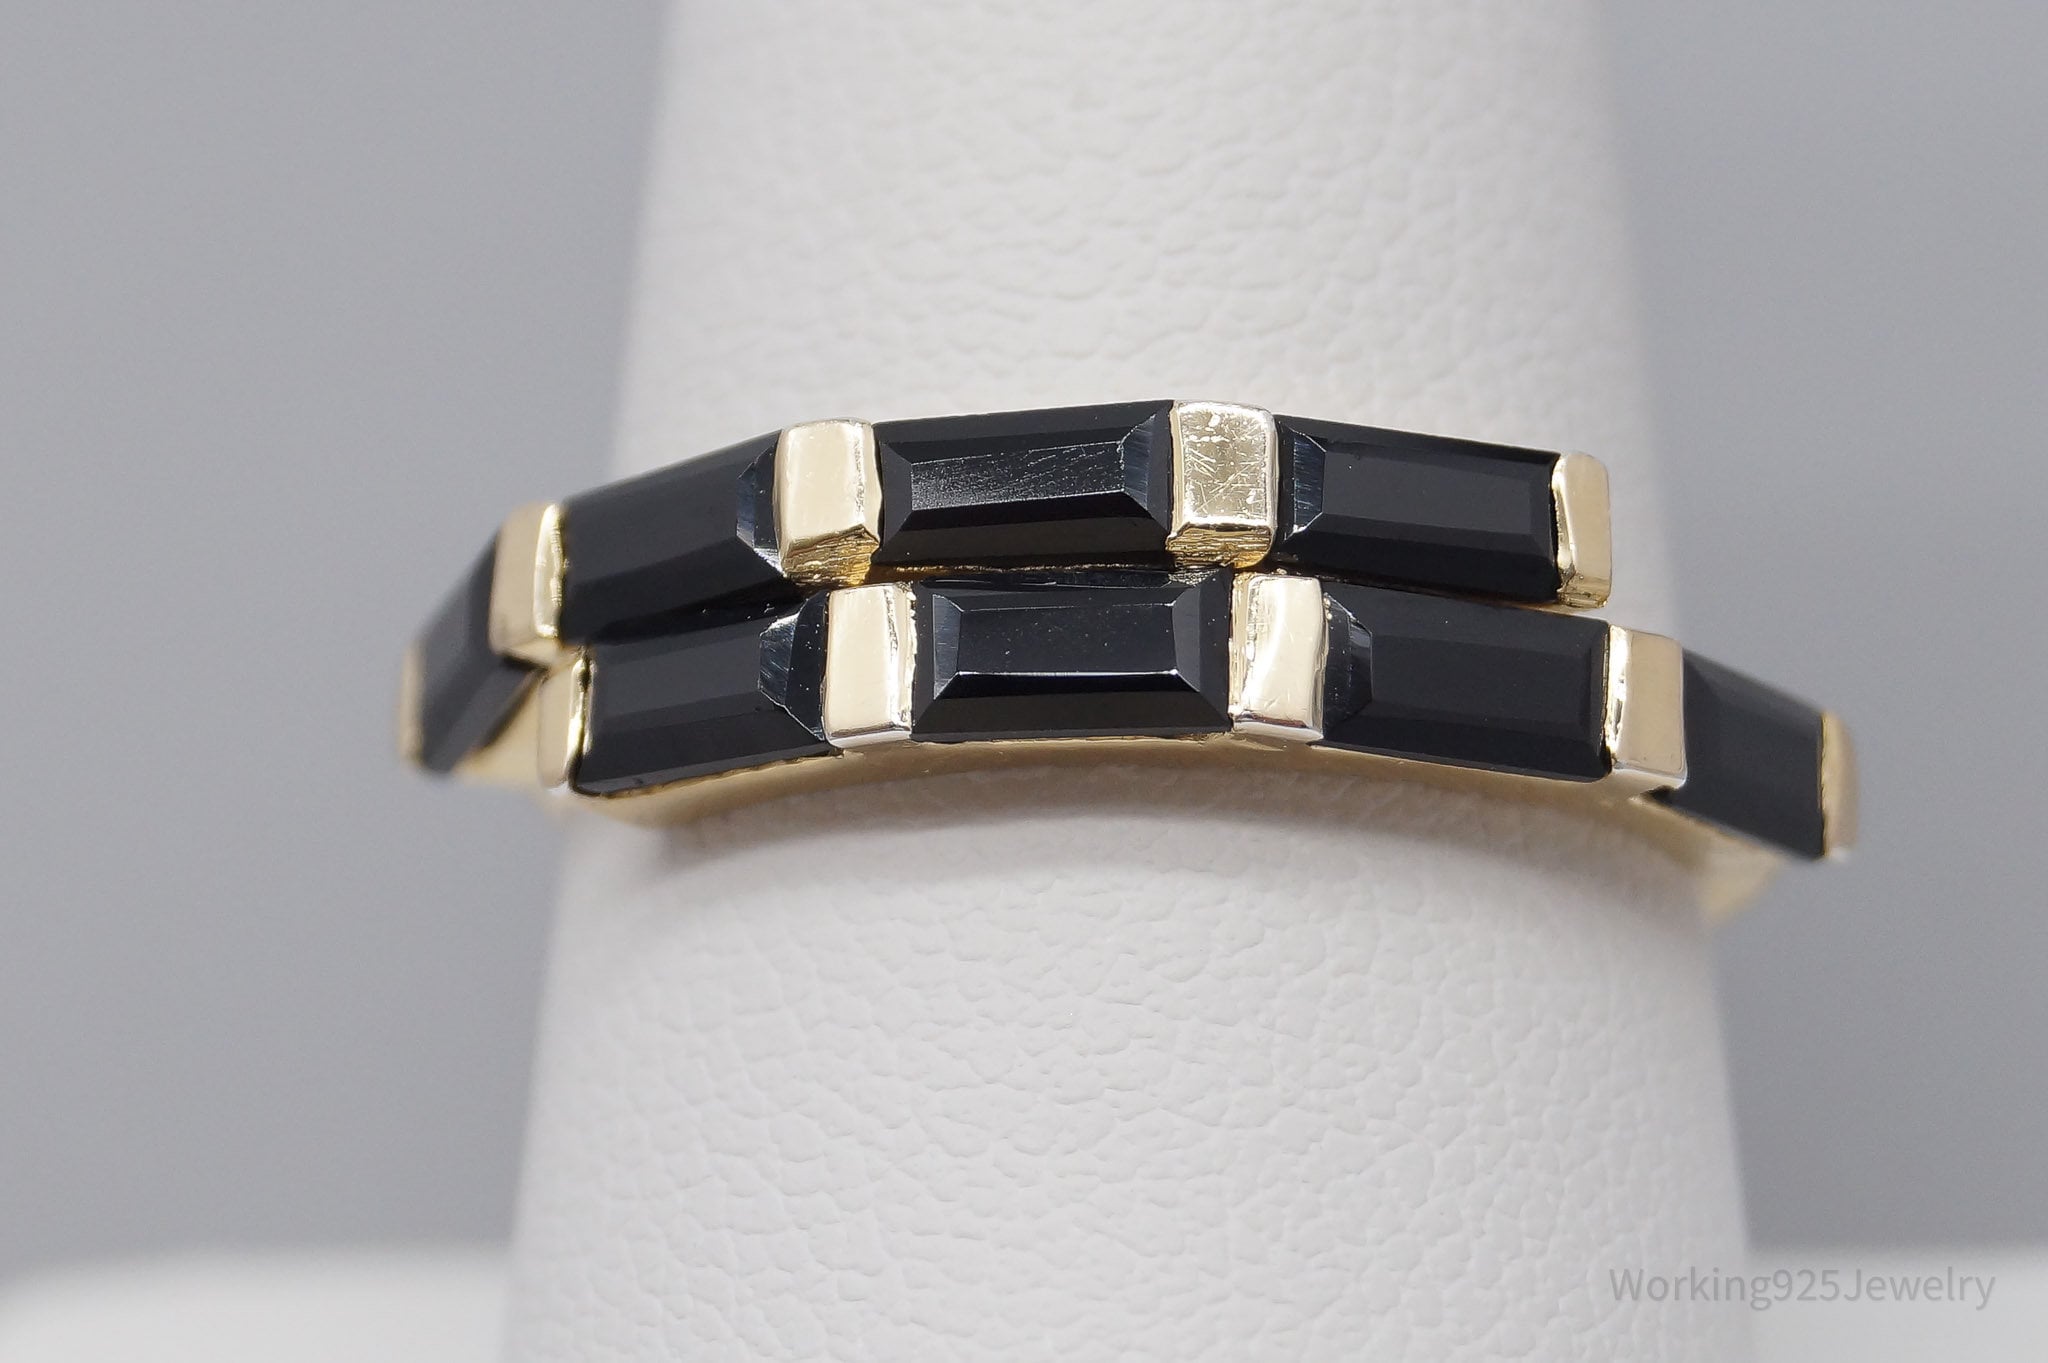 JTV Designer YS Black Onyx Gold Vermeil Sterling Silver Ring - Size 8.75